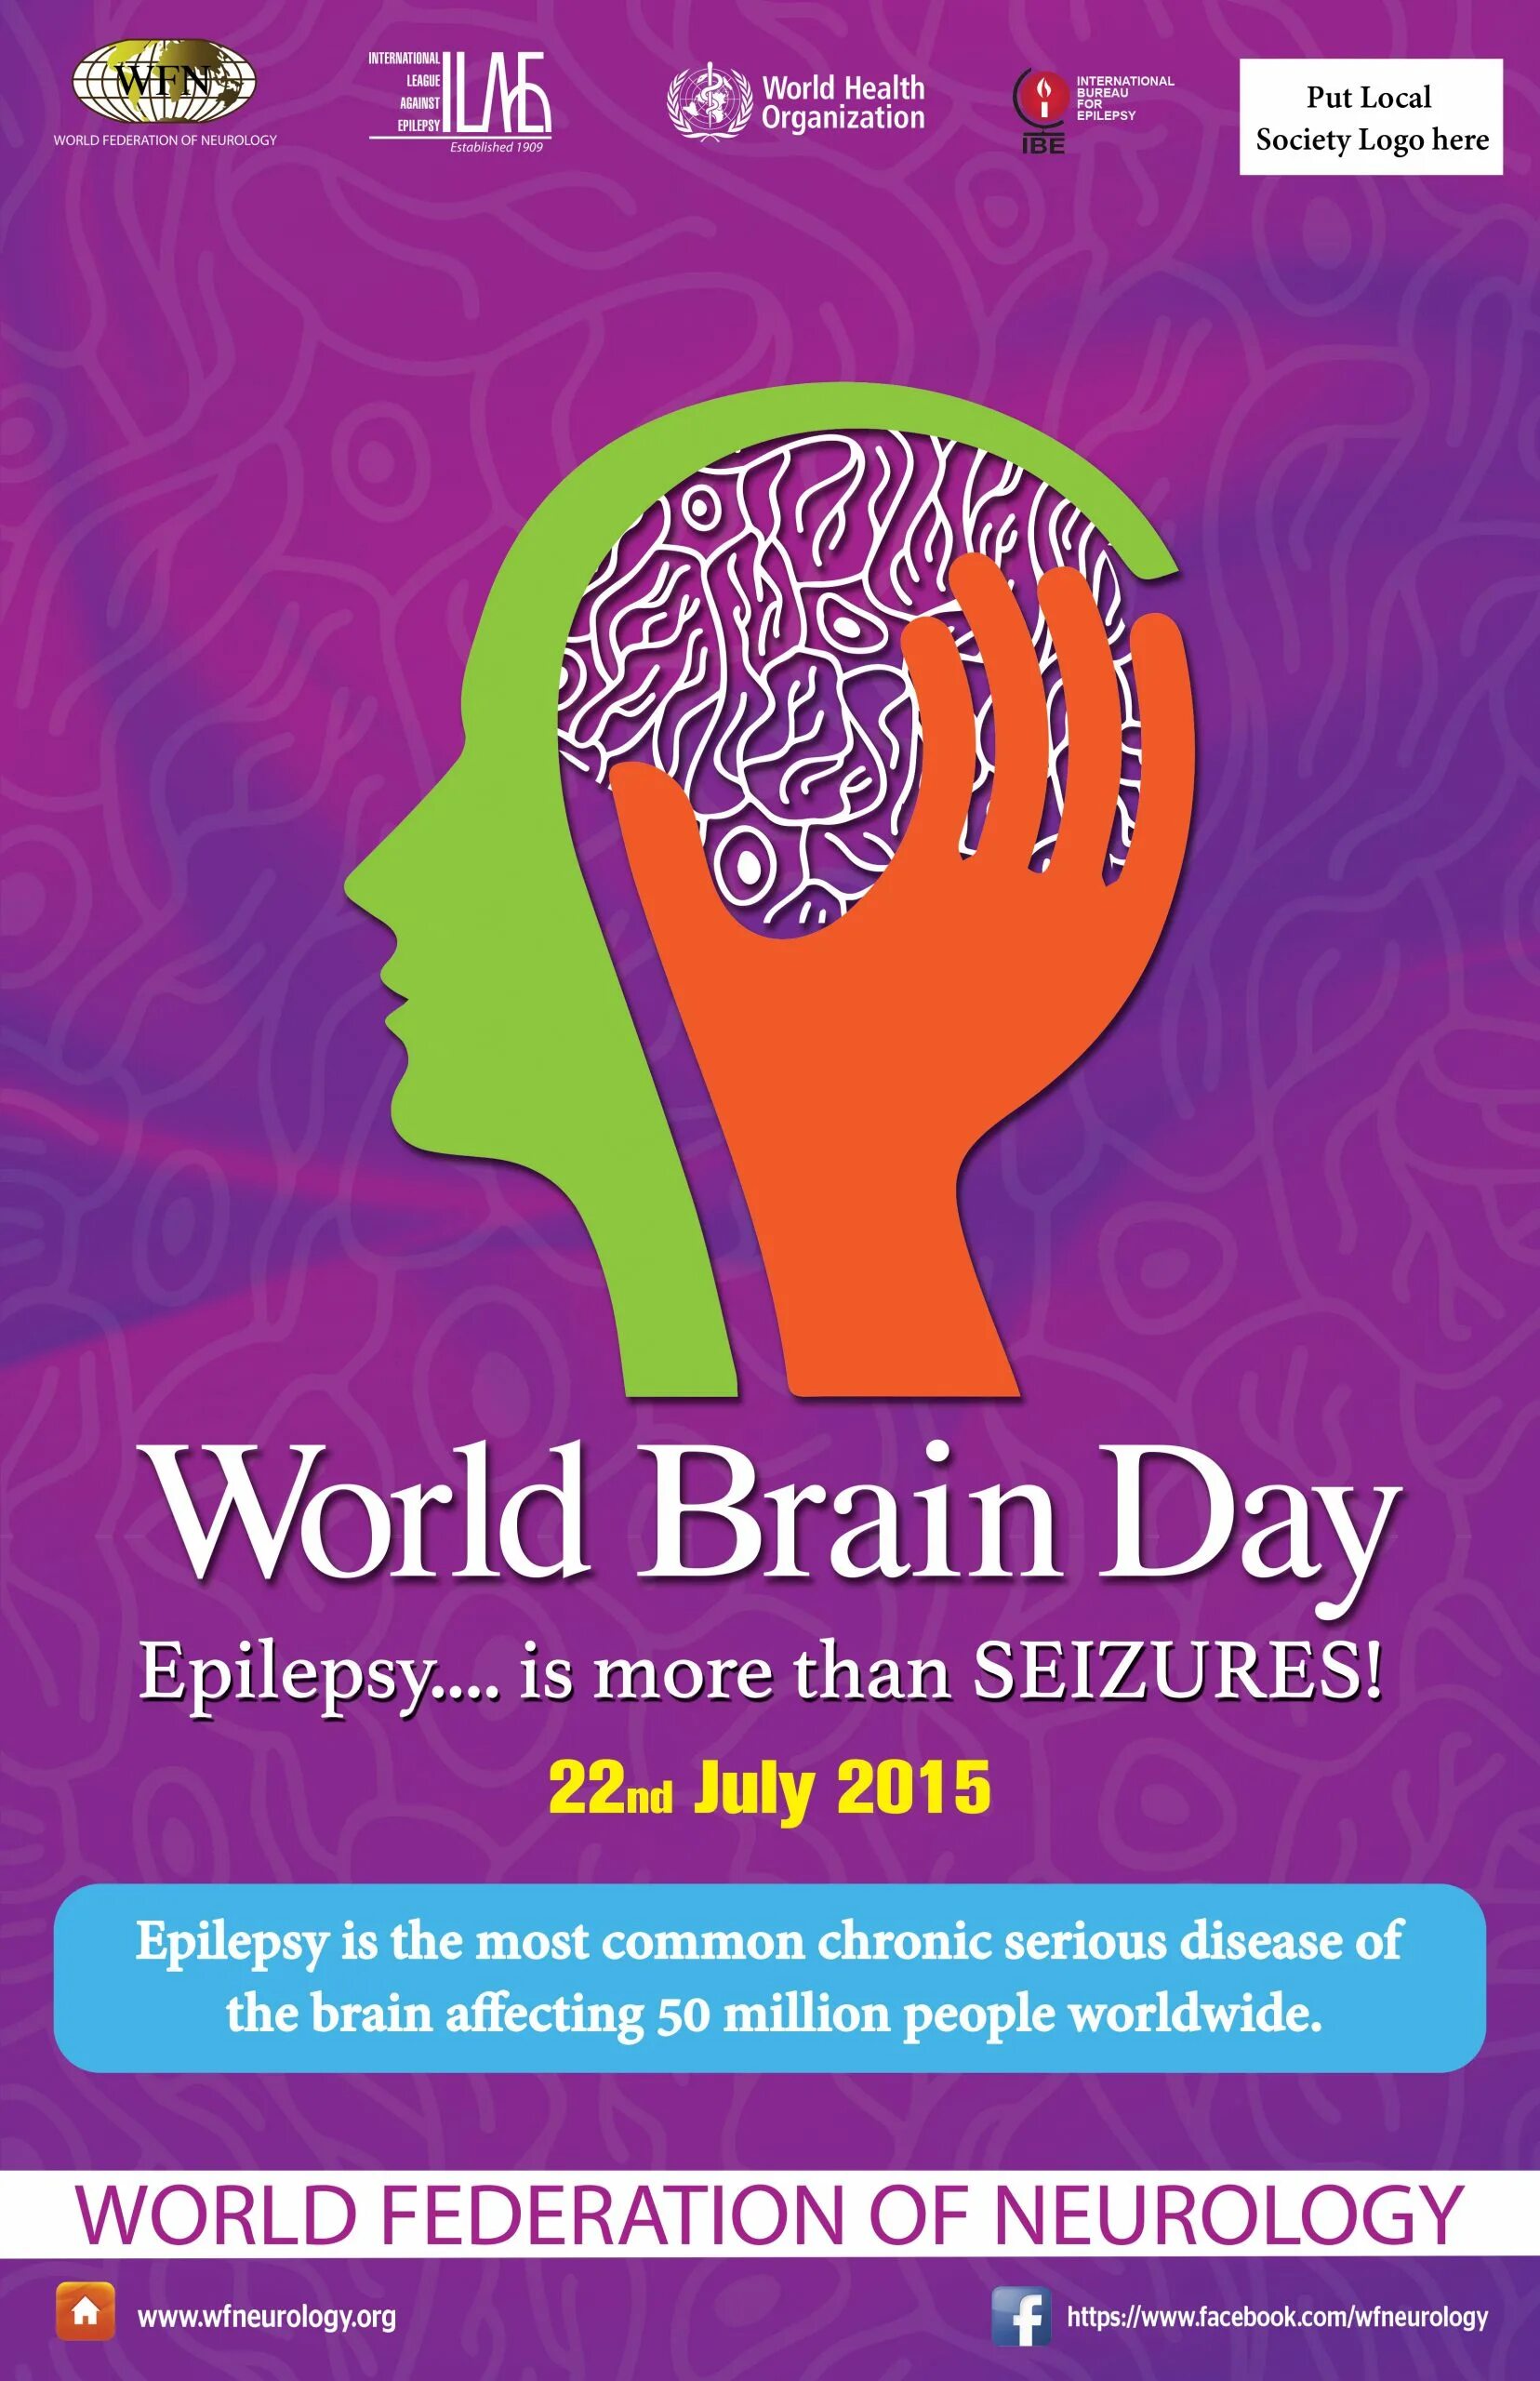 World Brain Day. Brain Day. The World for Brain. The International Bureau for Epilepsy (IBE).